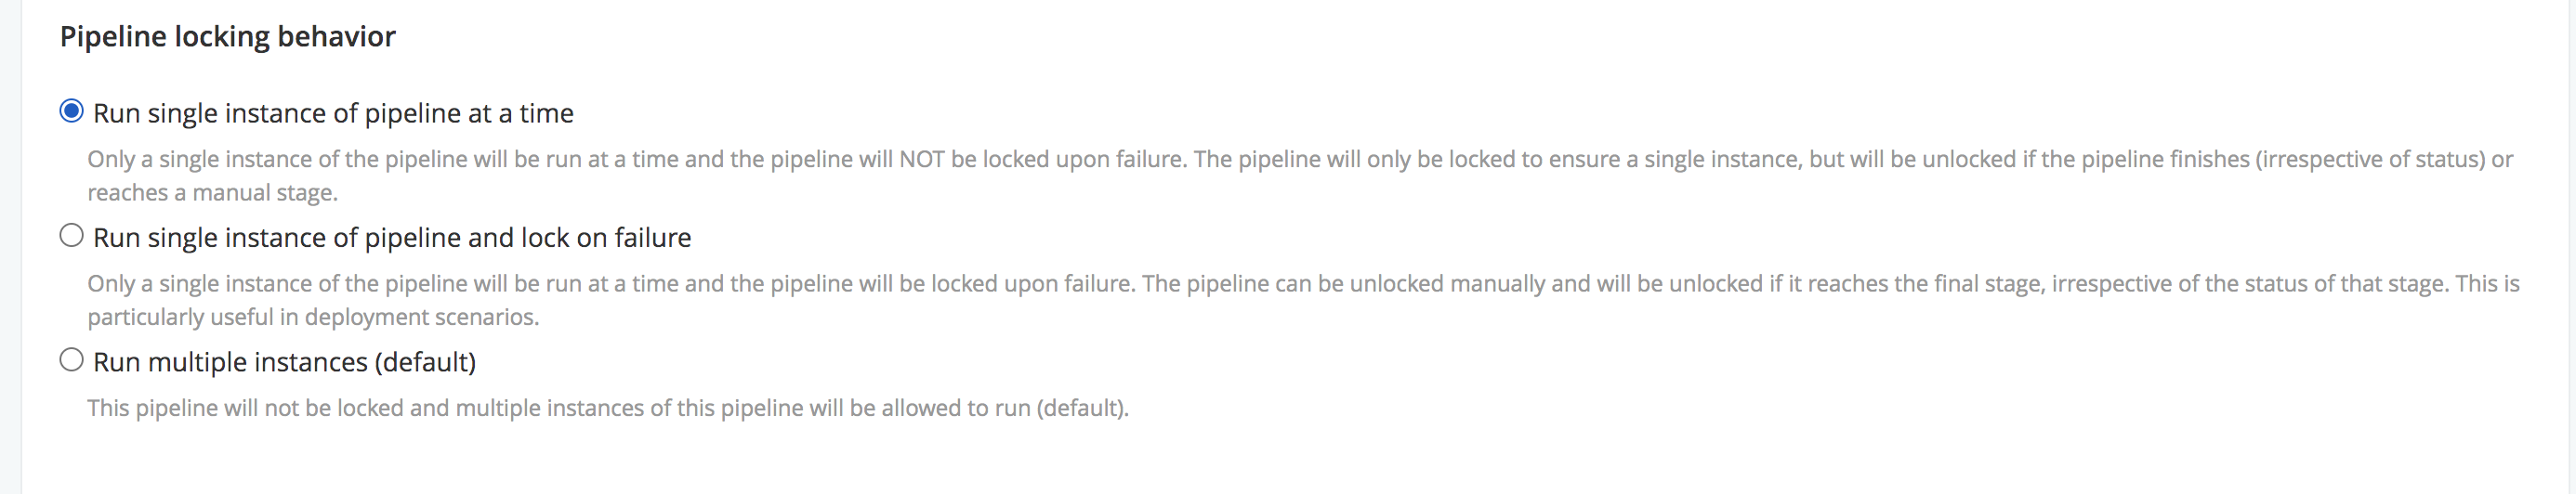 Pipeline locking behavior - Unlock when finished